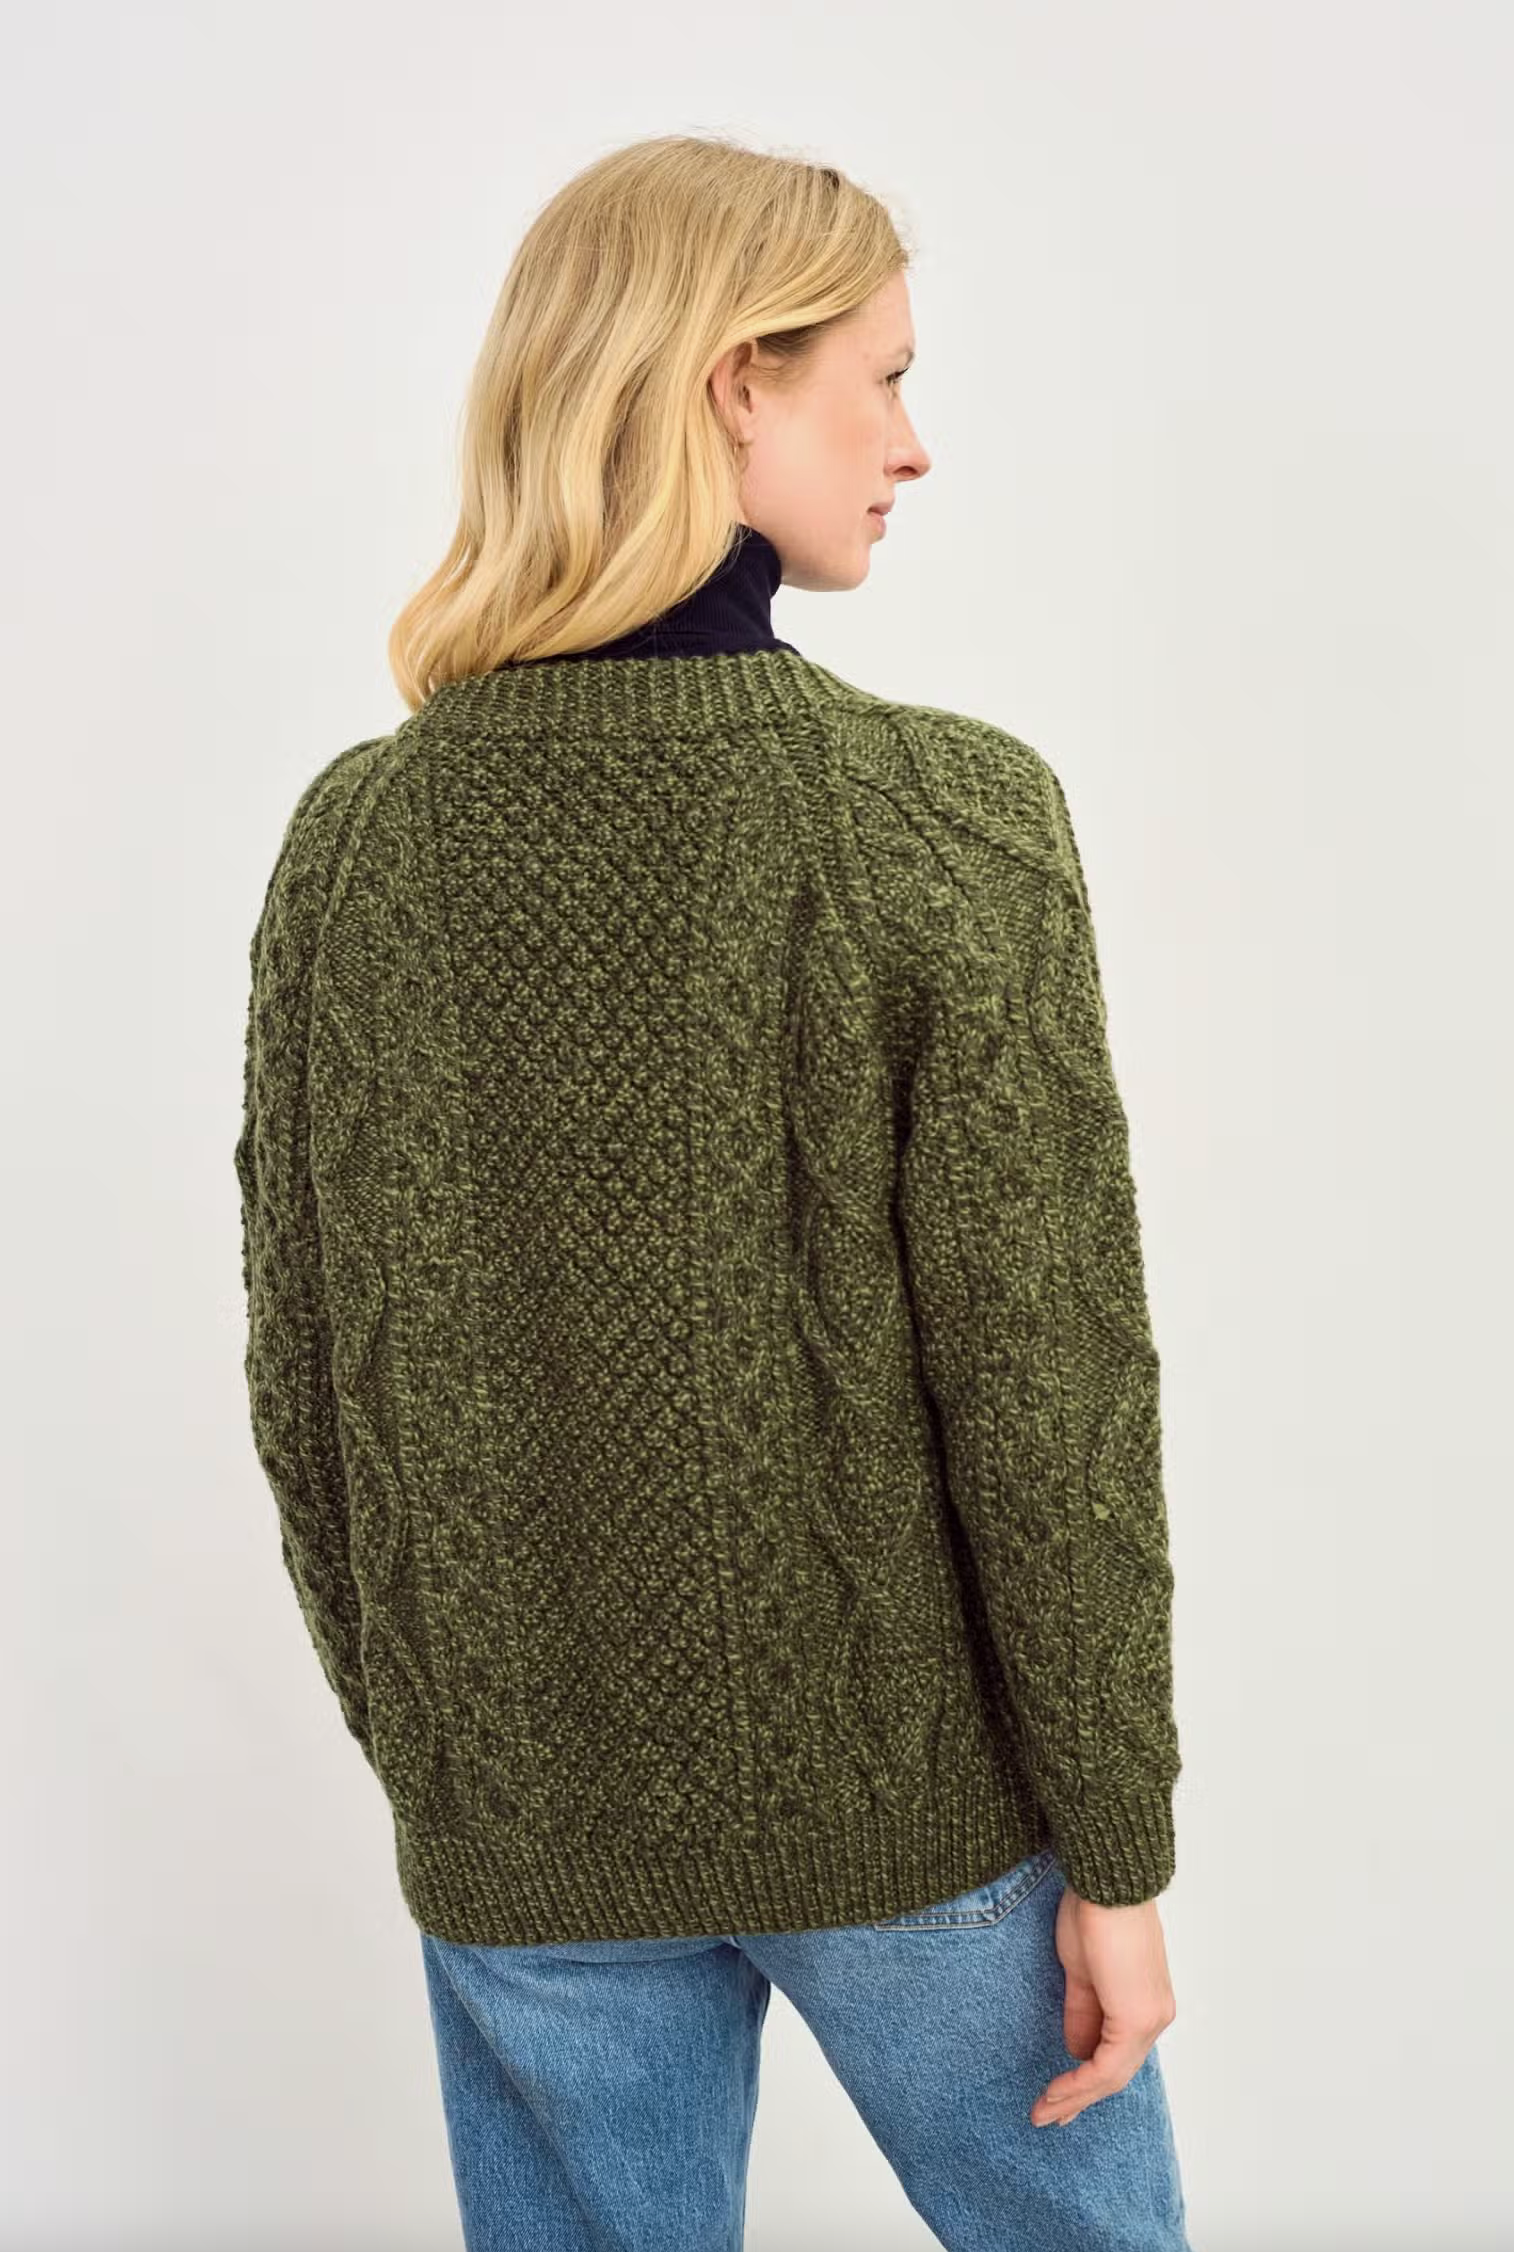 Breaffy Aran Cardigan Sweater